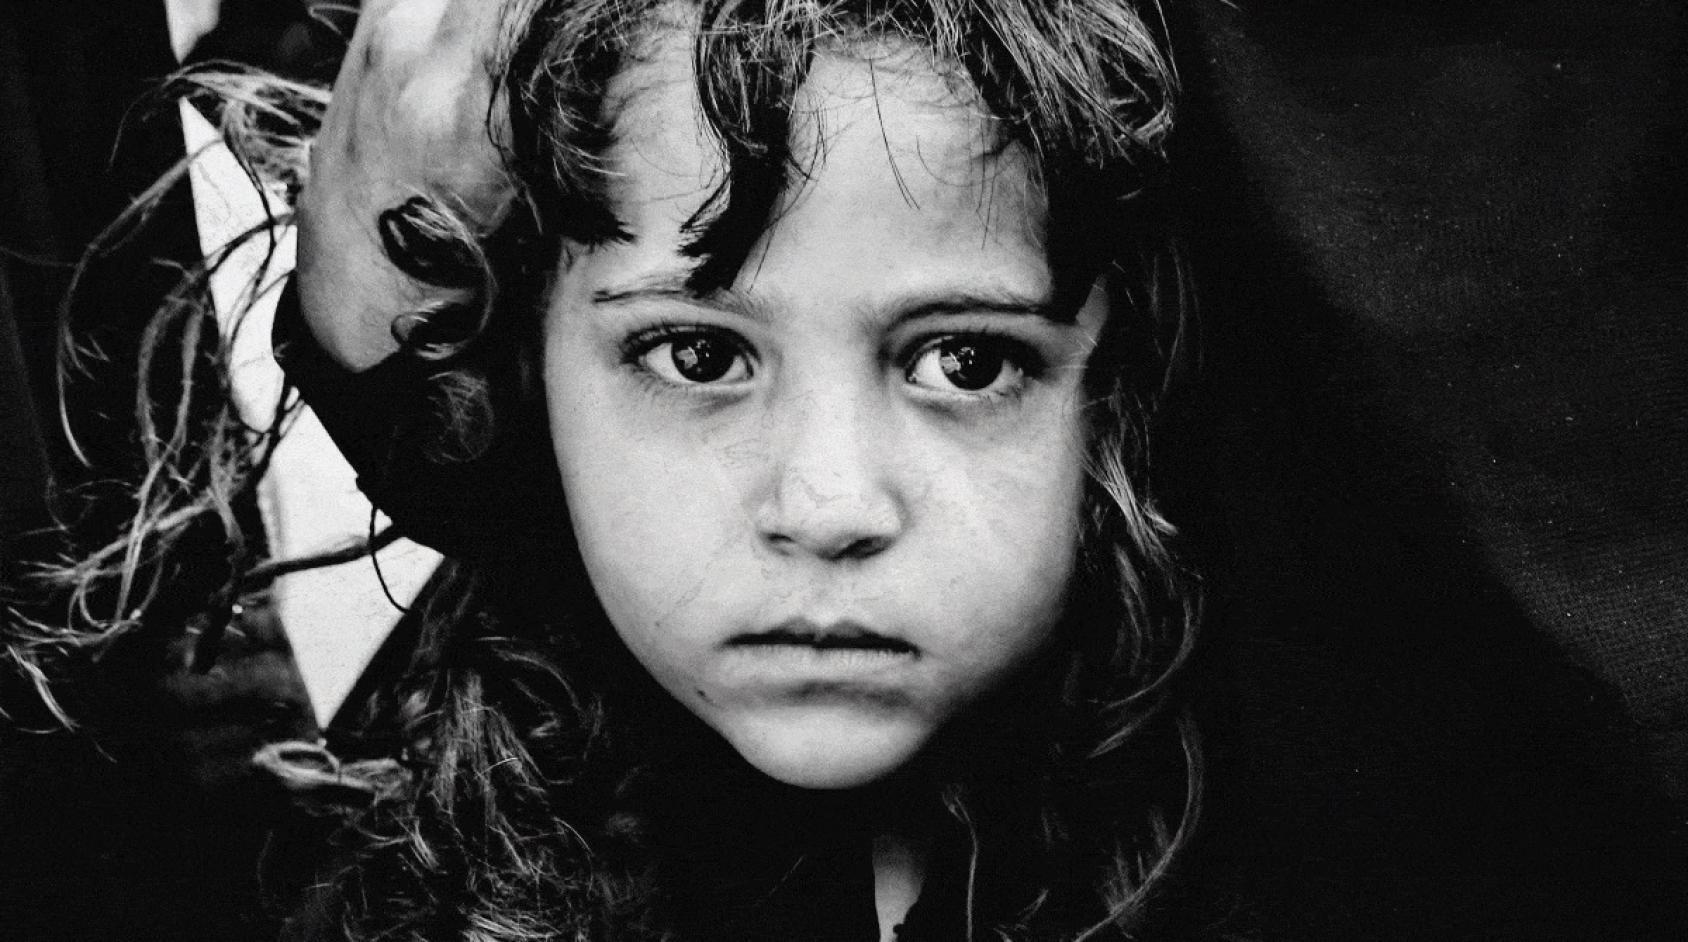 Close up black and white image of a little Yemeni girl.